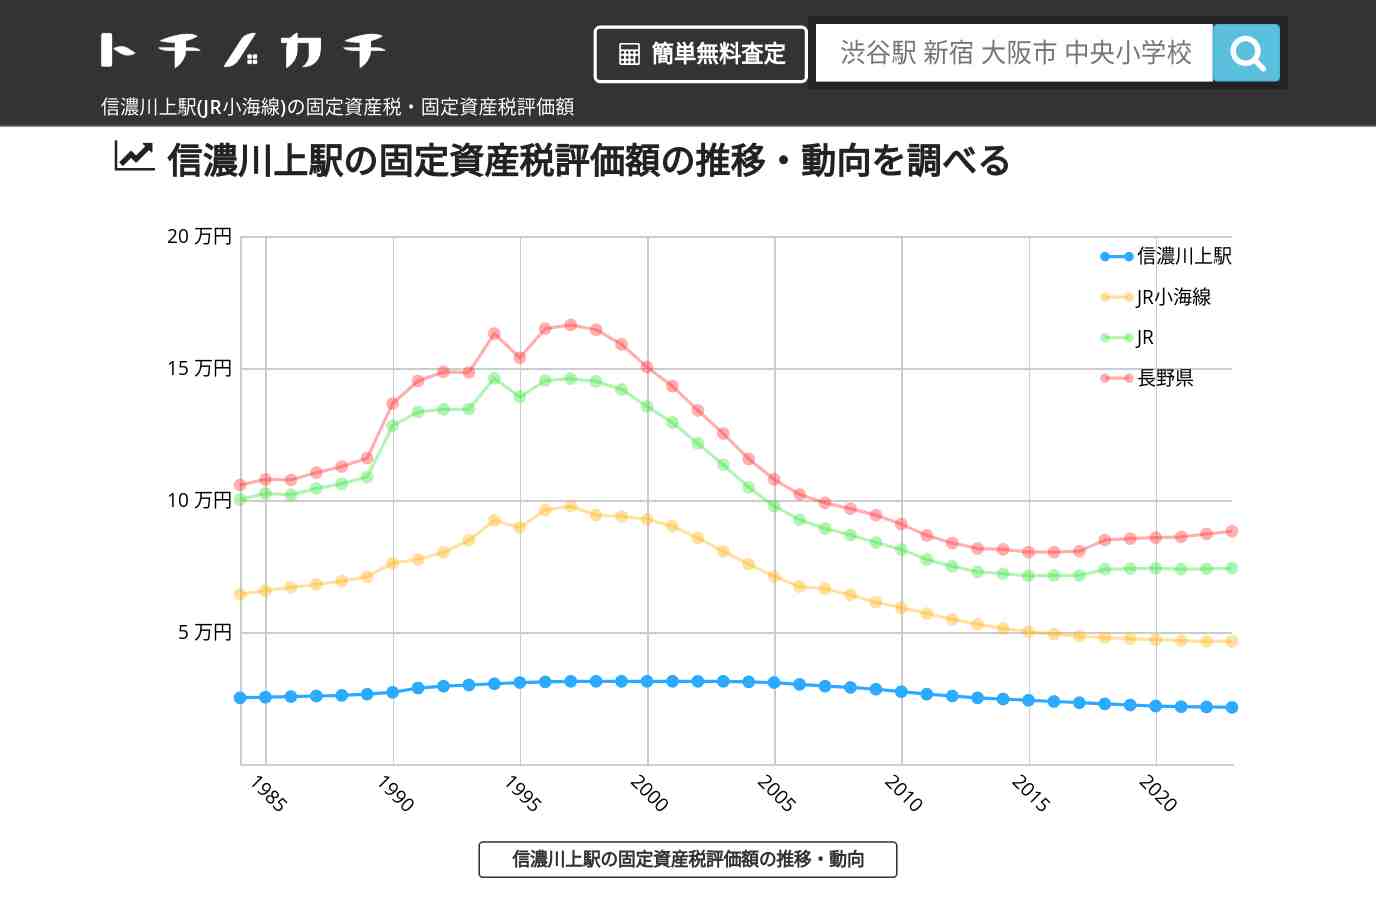 信濃川上駅(JR小海線)の固定資産税・固定資産税評価額 | トチノカチ